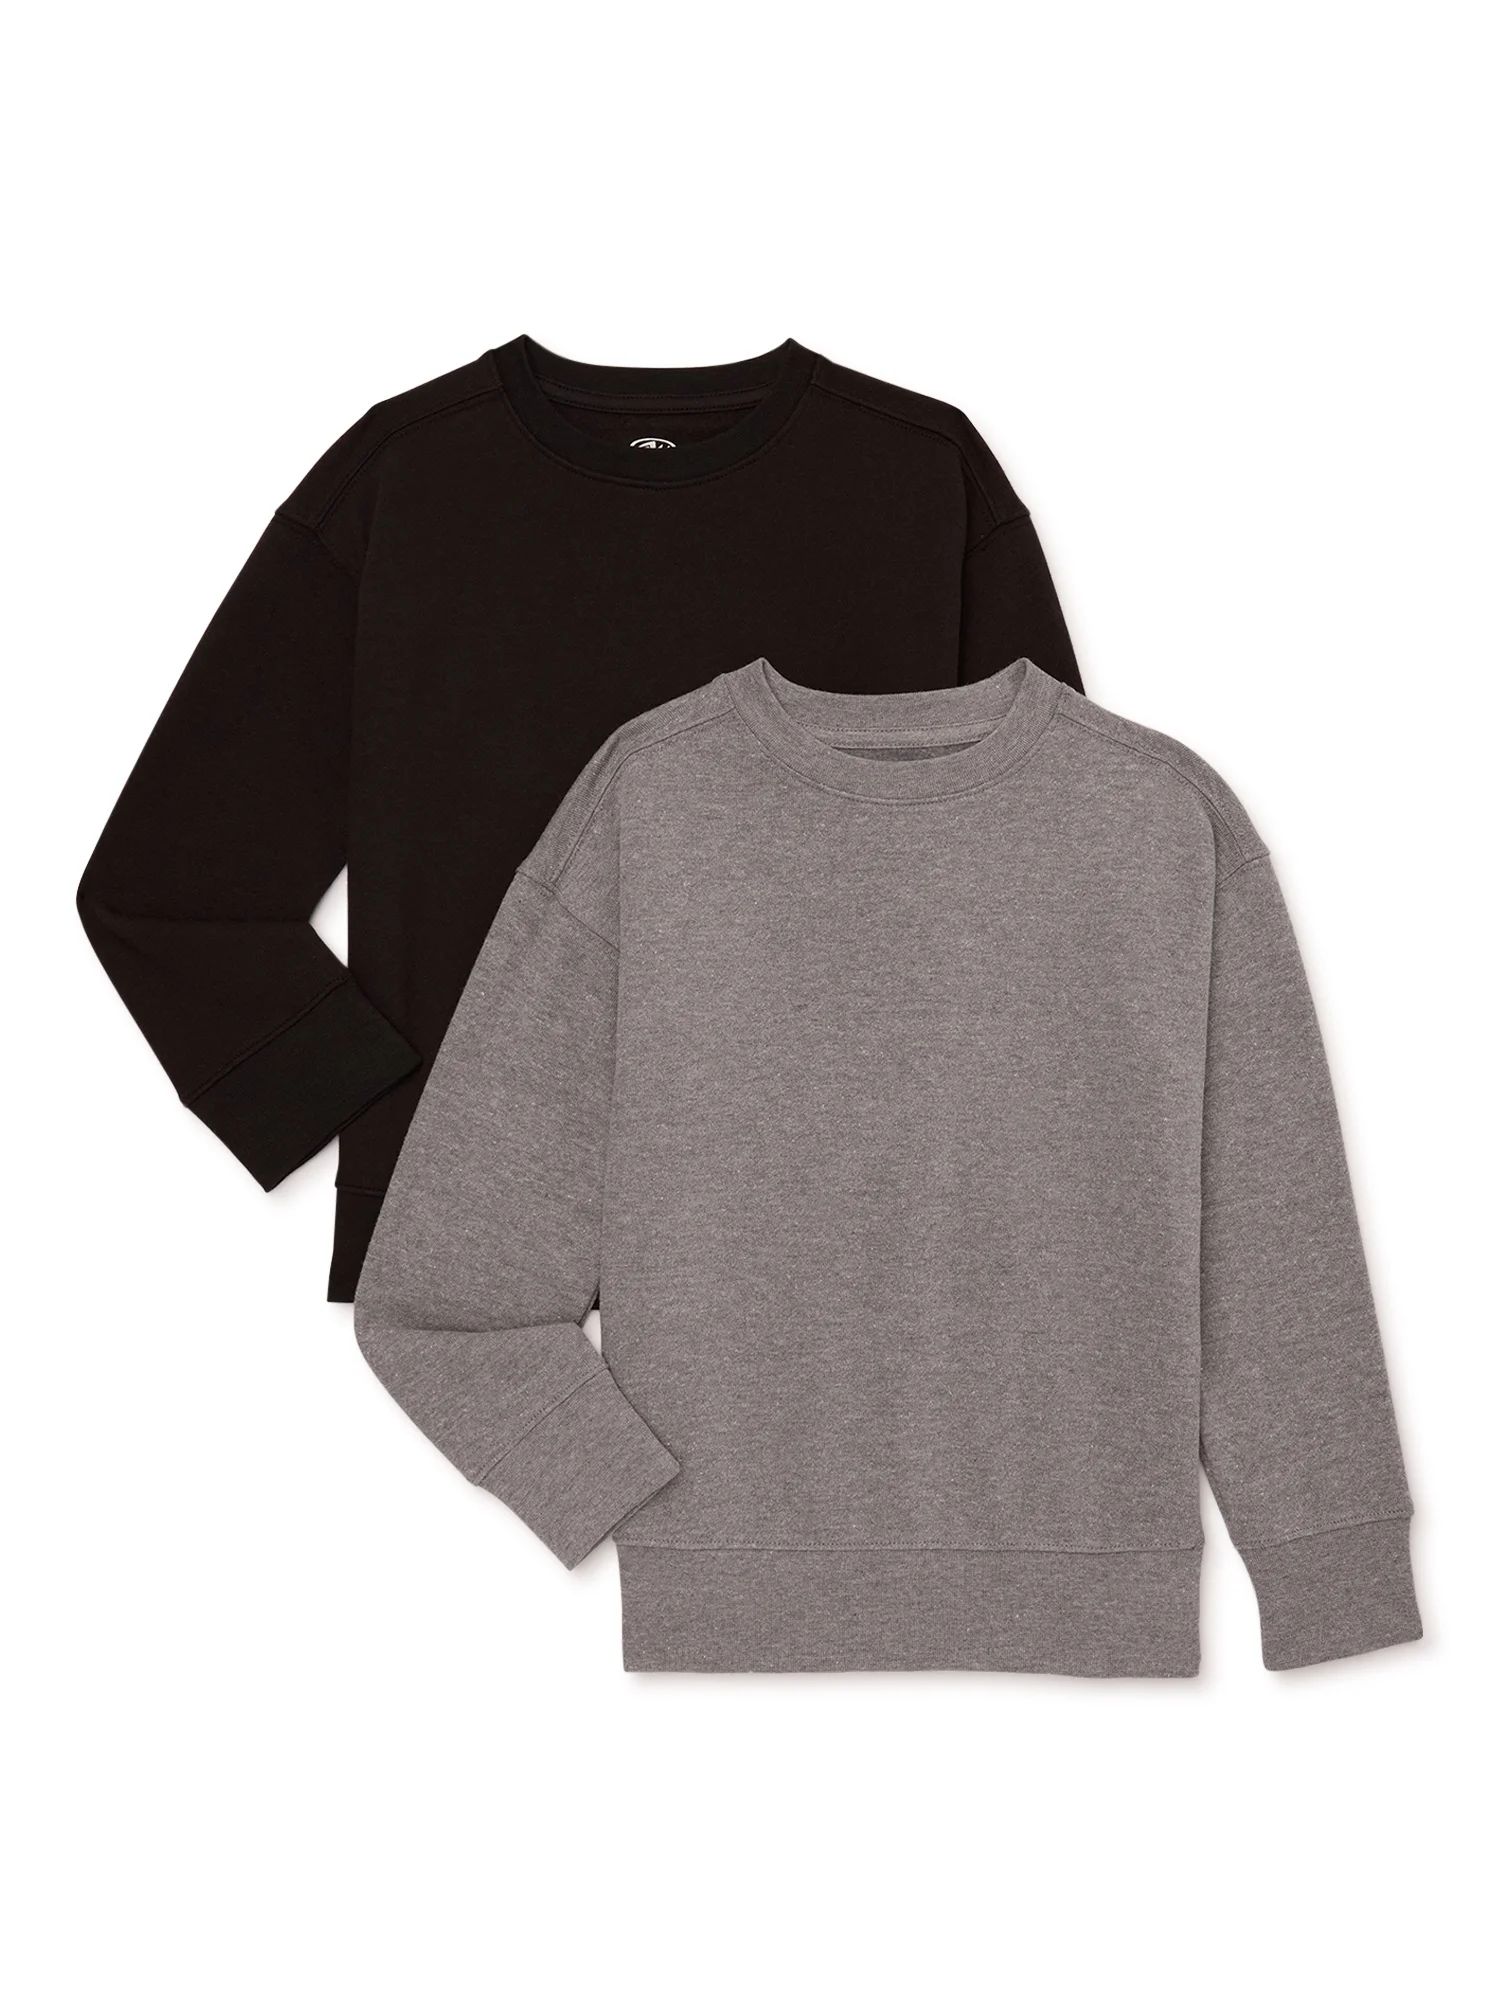 Athletic Works Boys Crewneck Sweatshirt with Long Sleeves, 2-Pack, Sizes 4-18 & Husky | Walmart (US)